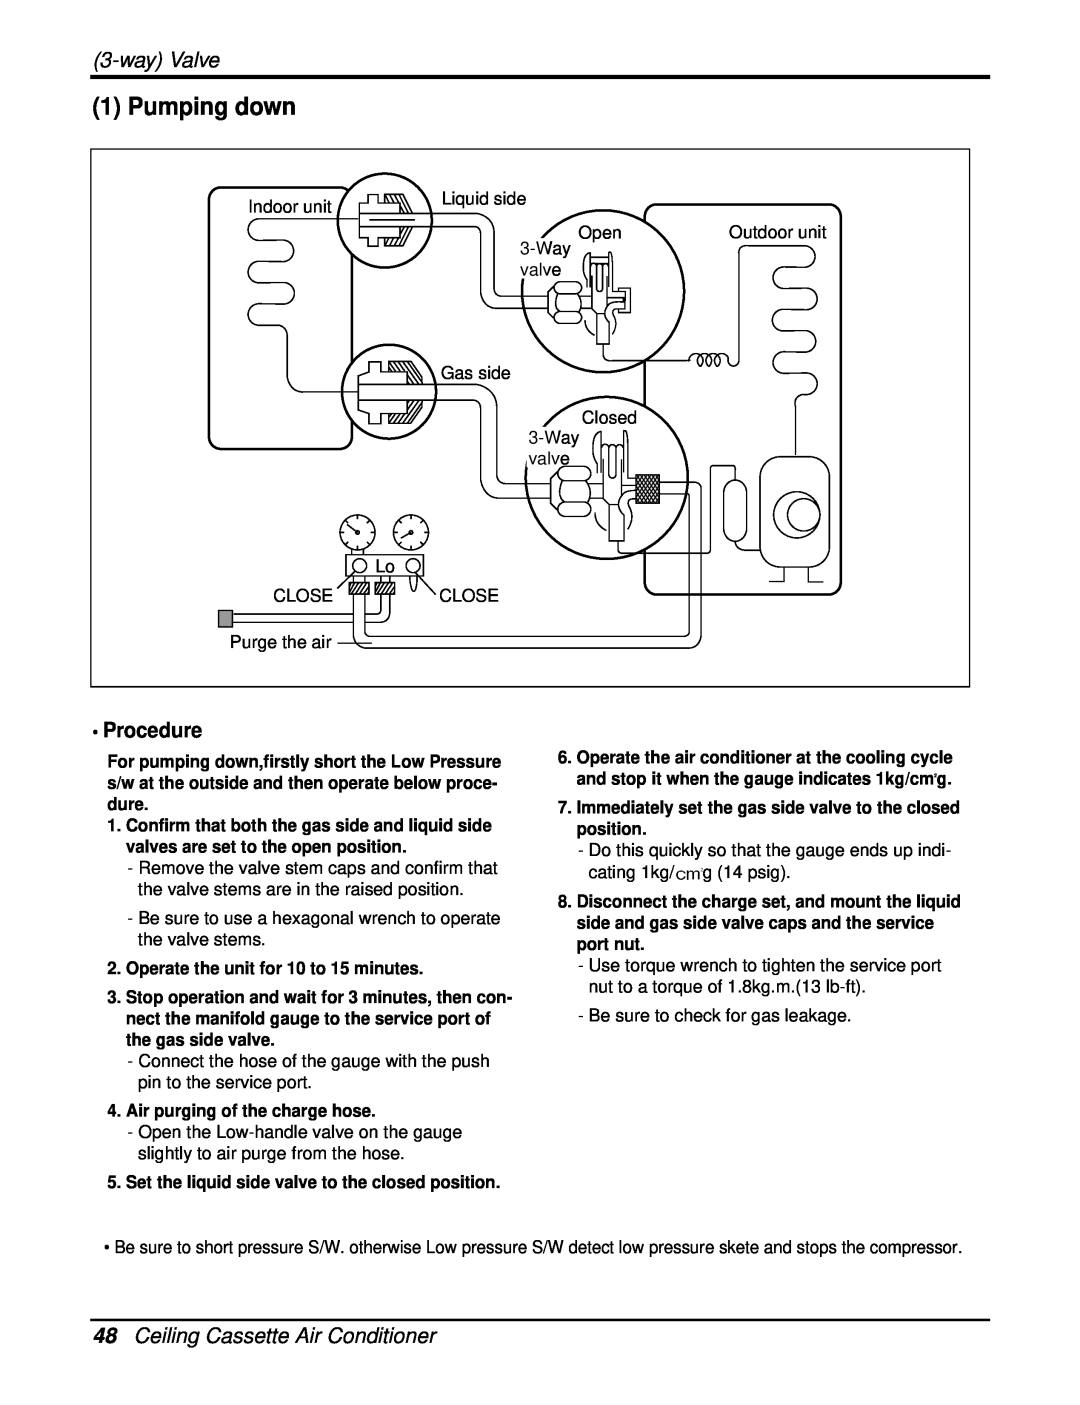 Heat Controller DMC24CA-1, DMC36CA-1 manual Pumping down, 48Ceiling Cassette Air Conditioner, wayValve, Procedure 